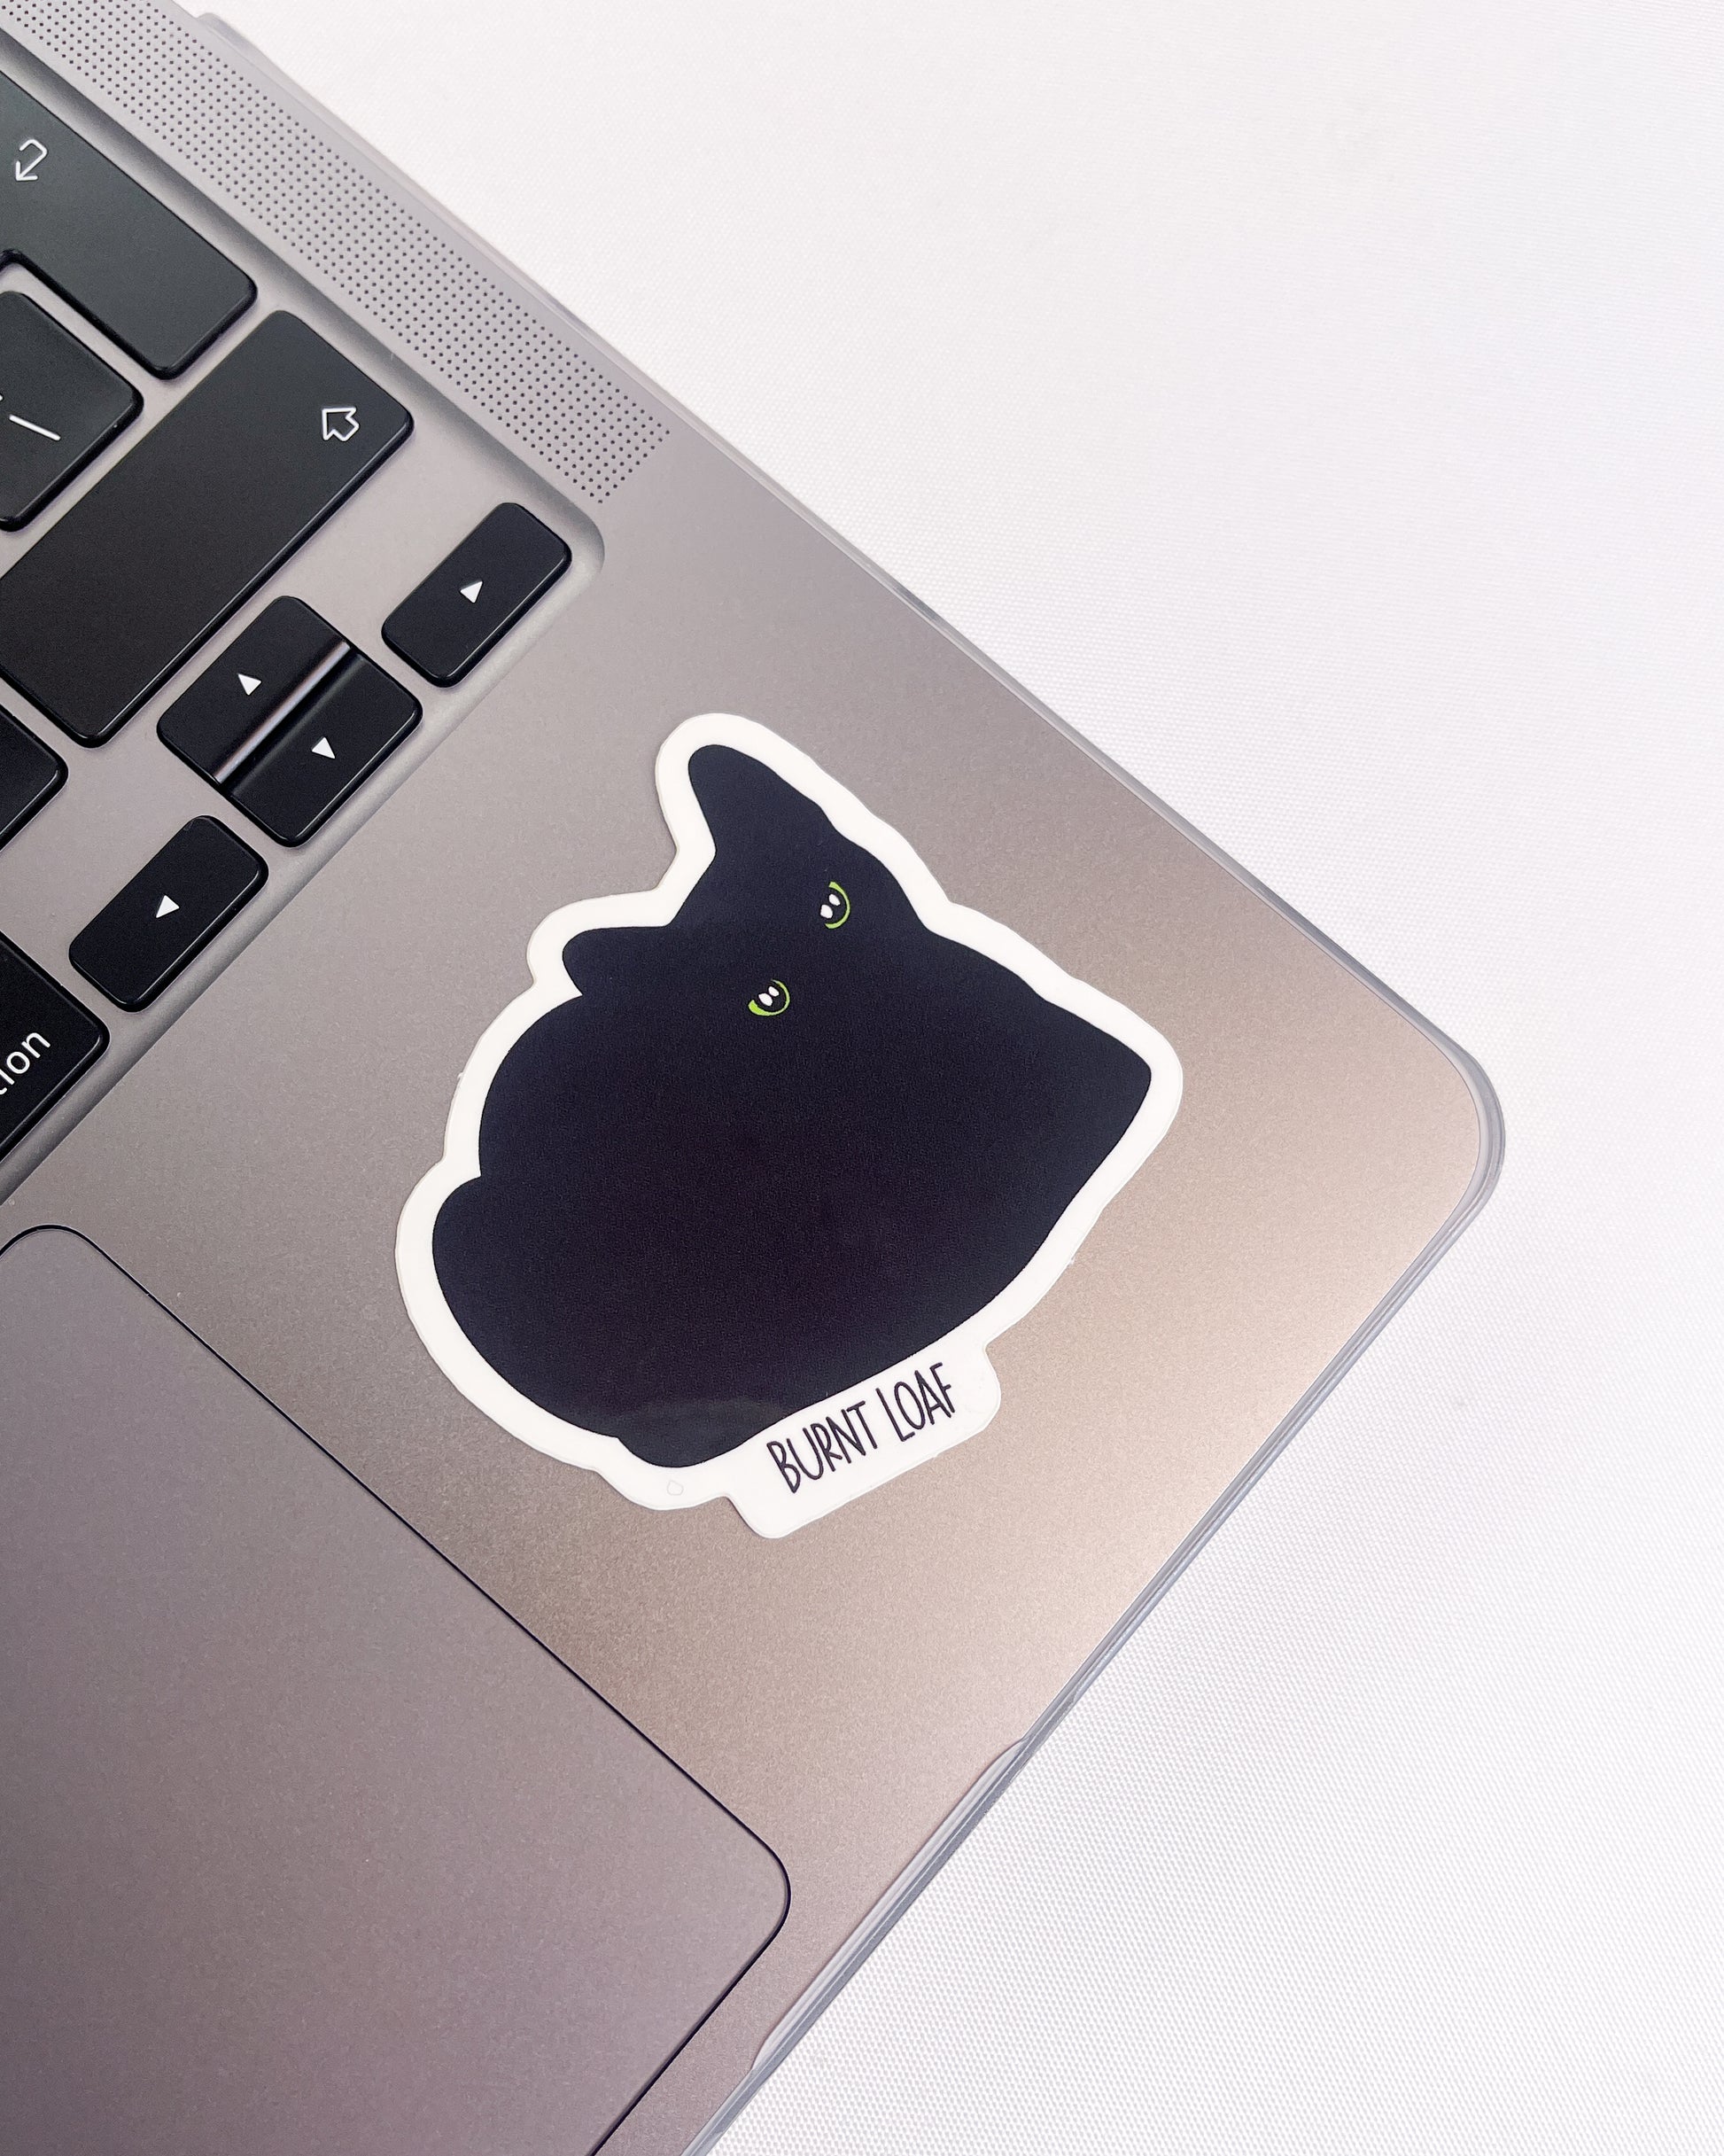 Cute Black Cat Sticker - Sticker Graphic - for Water Bottles Laptop Meme  Water